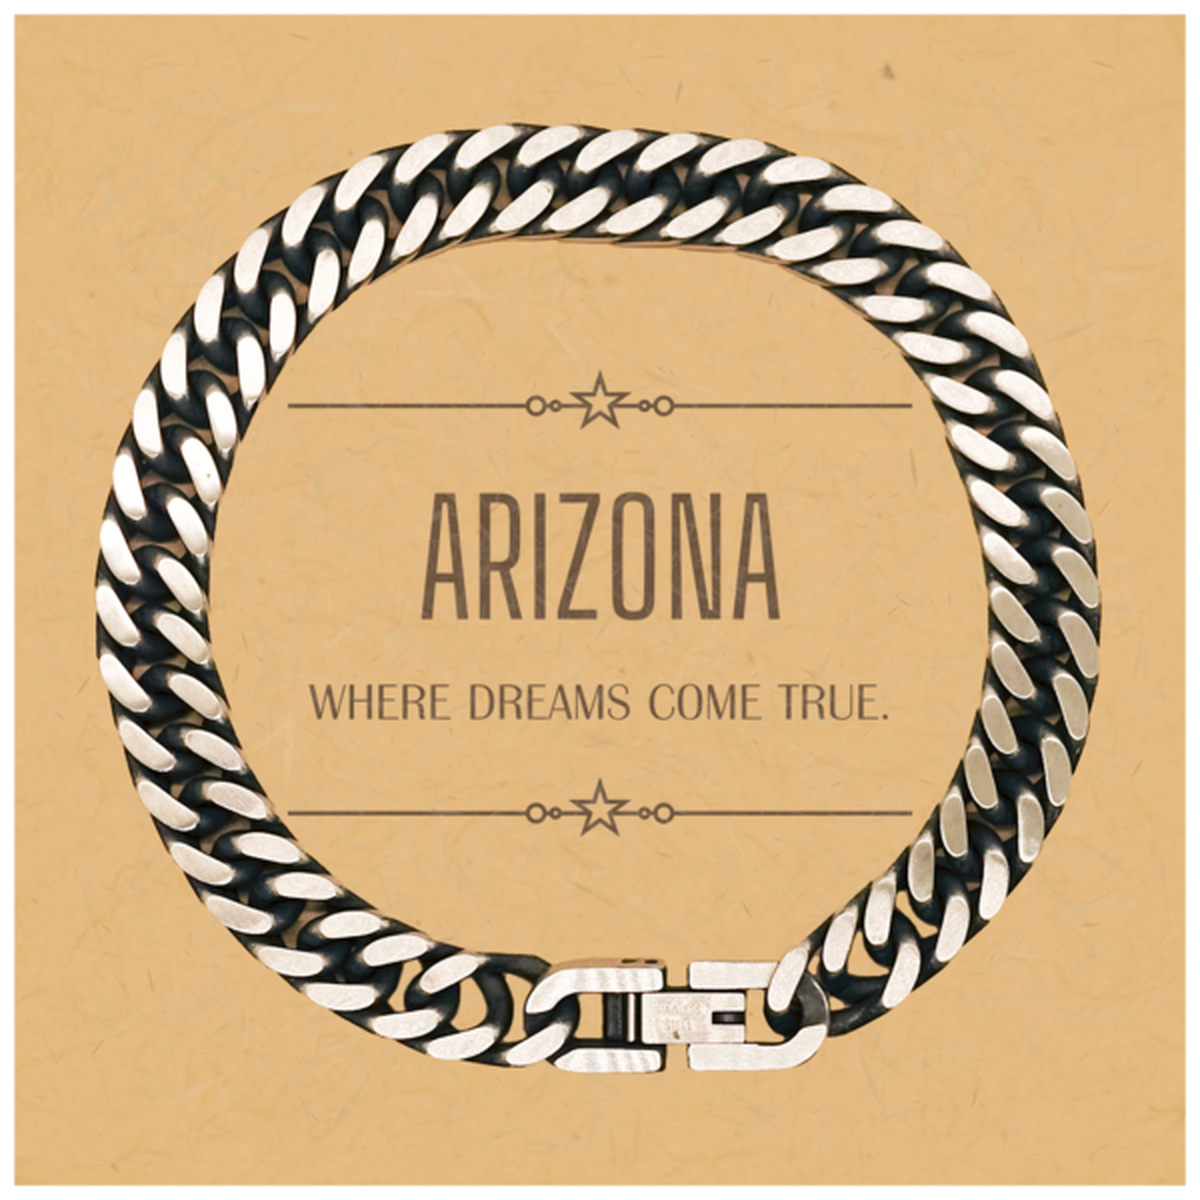 Love Arizona State Cuban Link Chain Bracelet, Arizona Where dreams come true, Birthday Christmas Inspirational Gifts For Arizona Men, Women, Friends